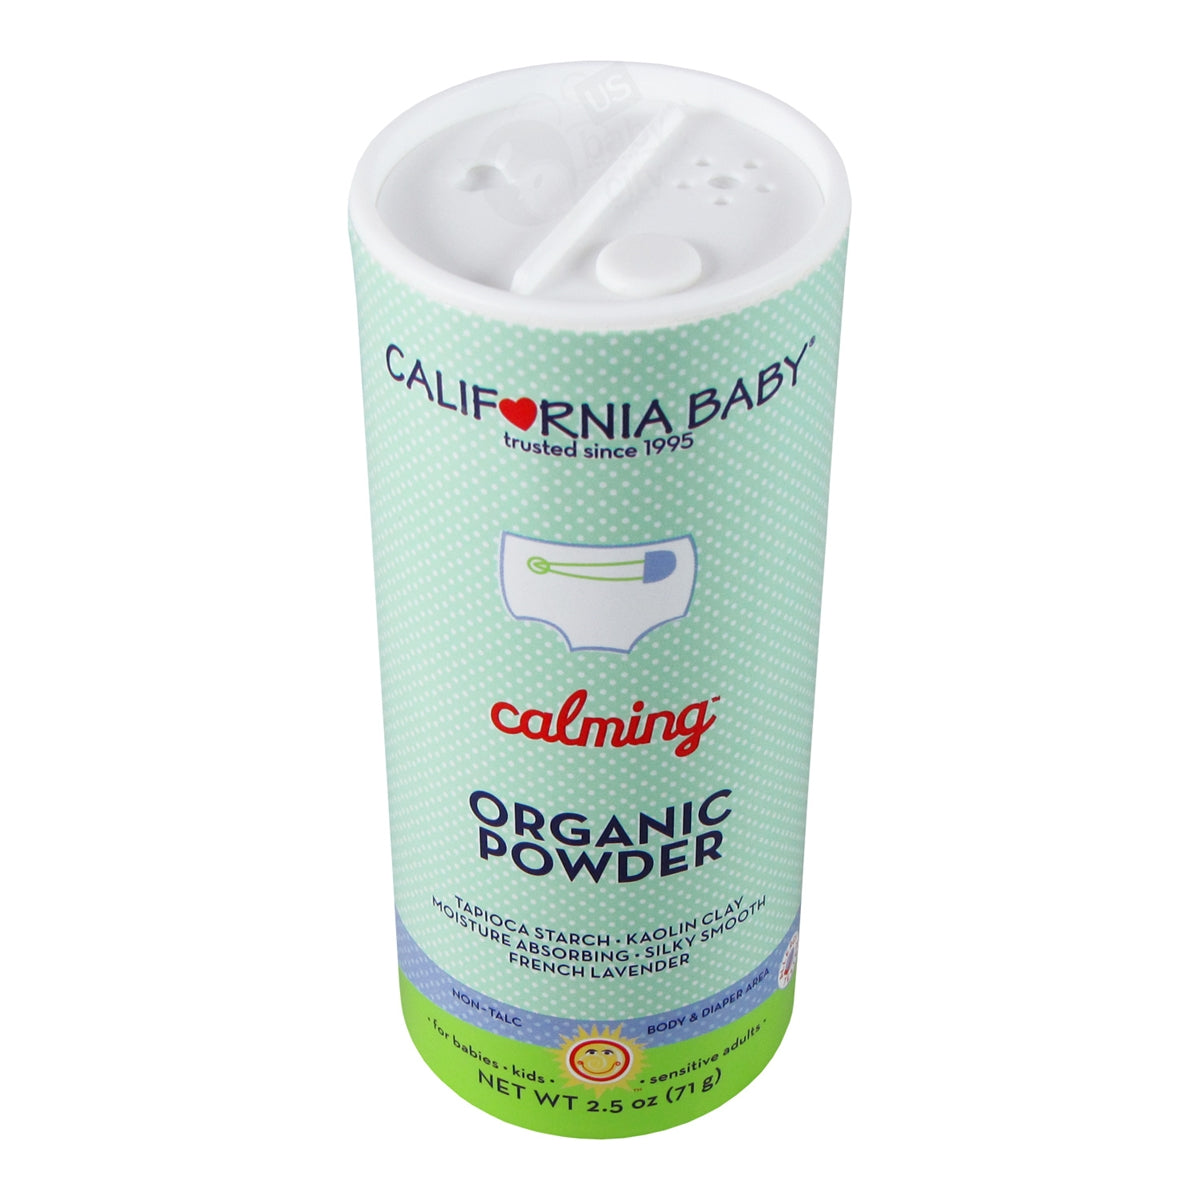 Calming Organic Powder - 2.5 oz. (California Baby)